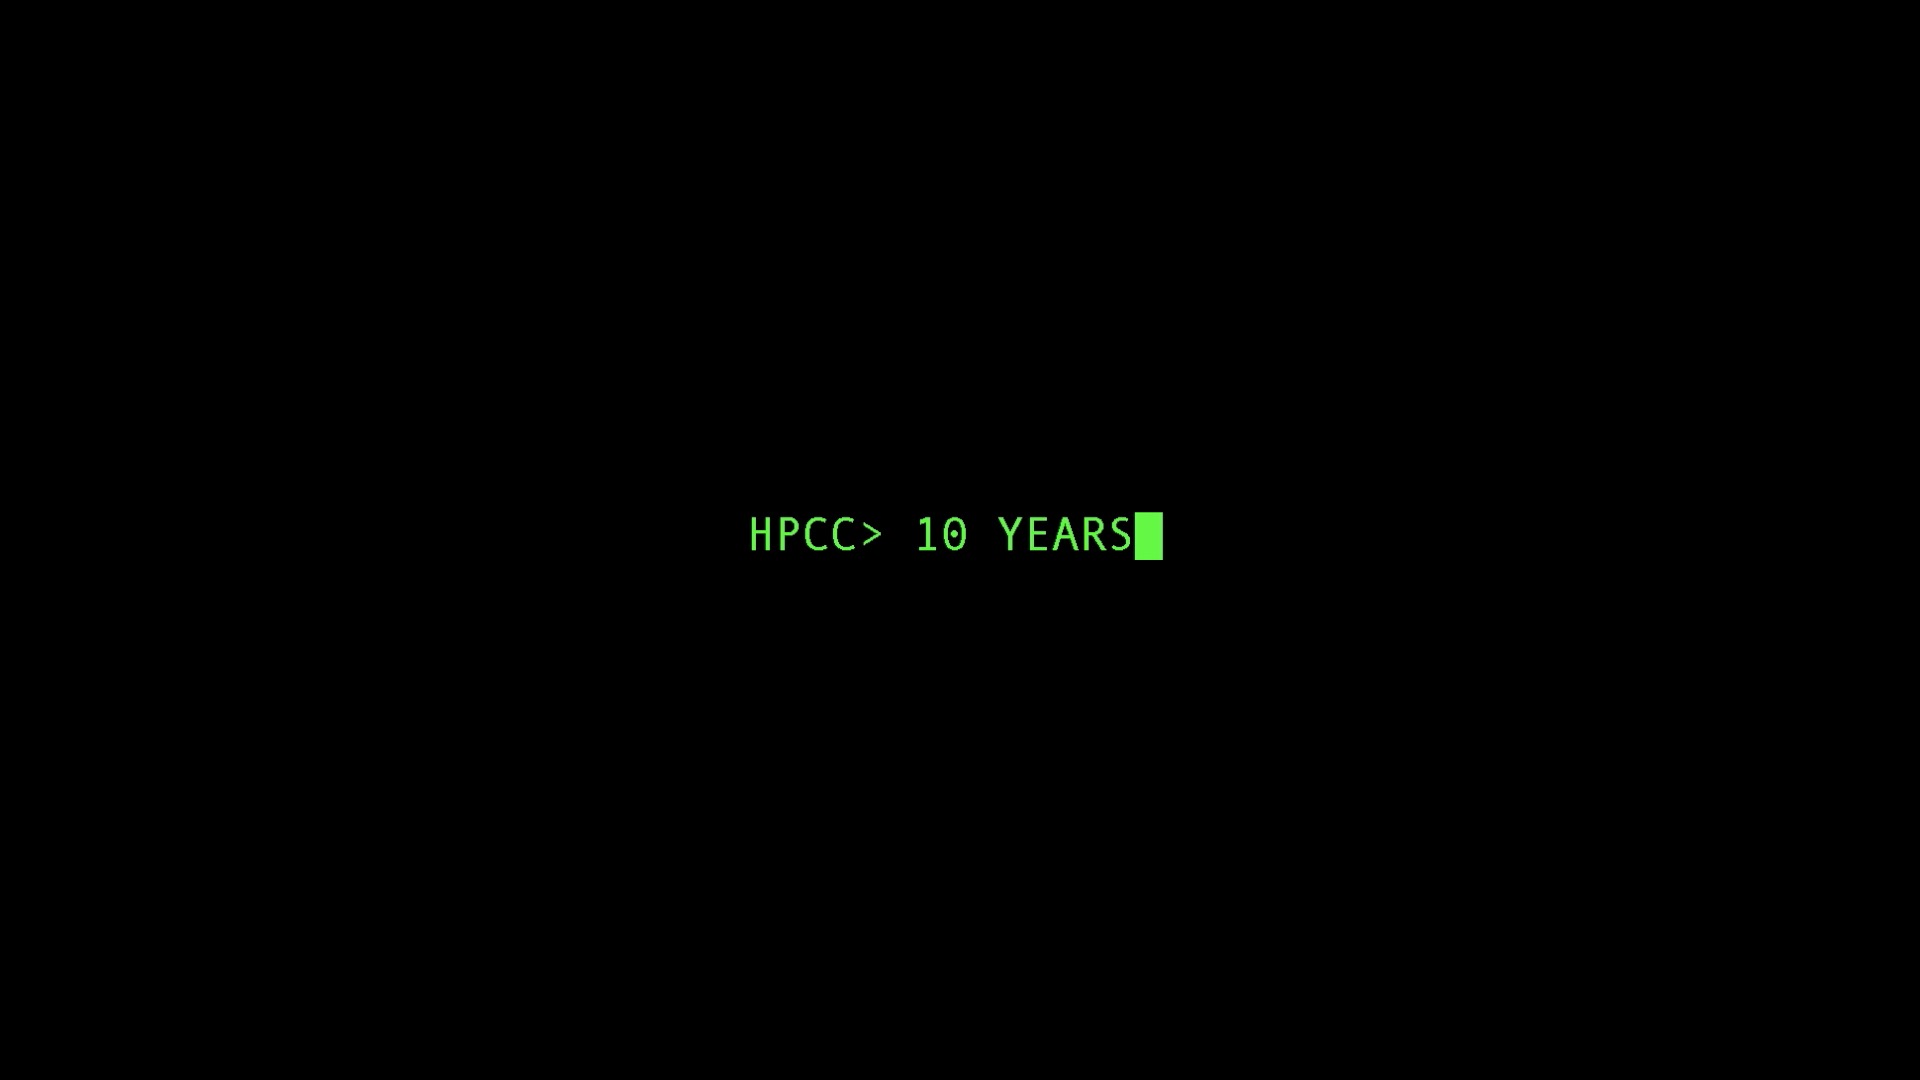 High Performance Computing Center: 10 Years